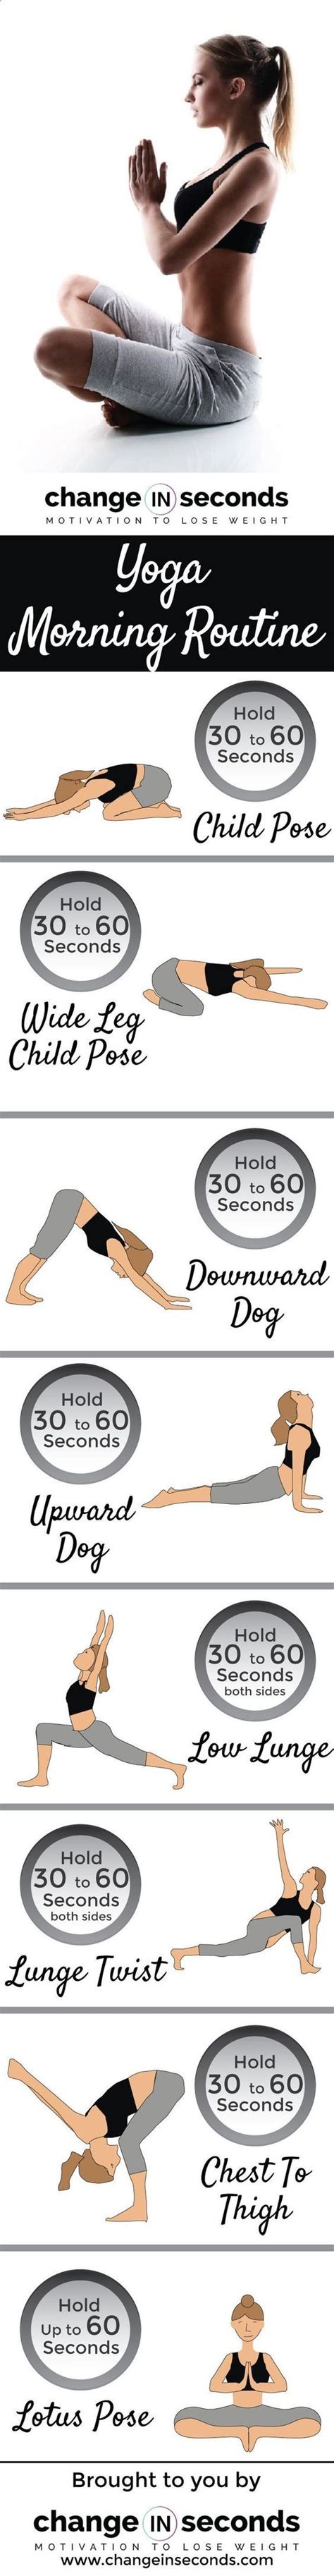 12 easy yoga morning routine yoga poses